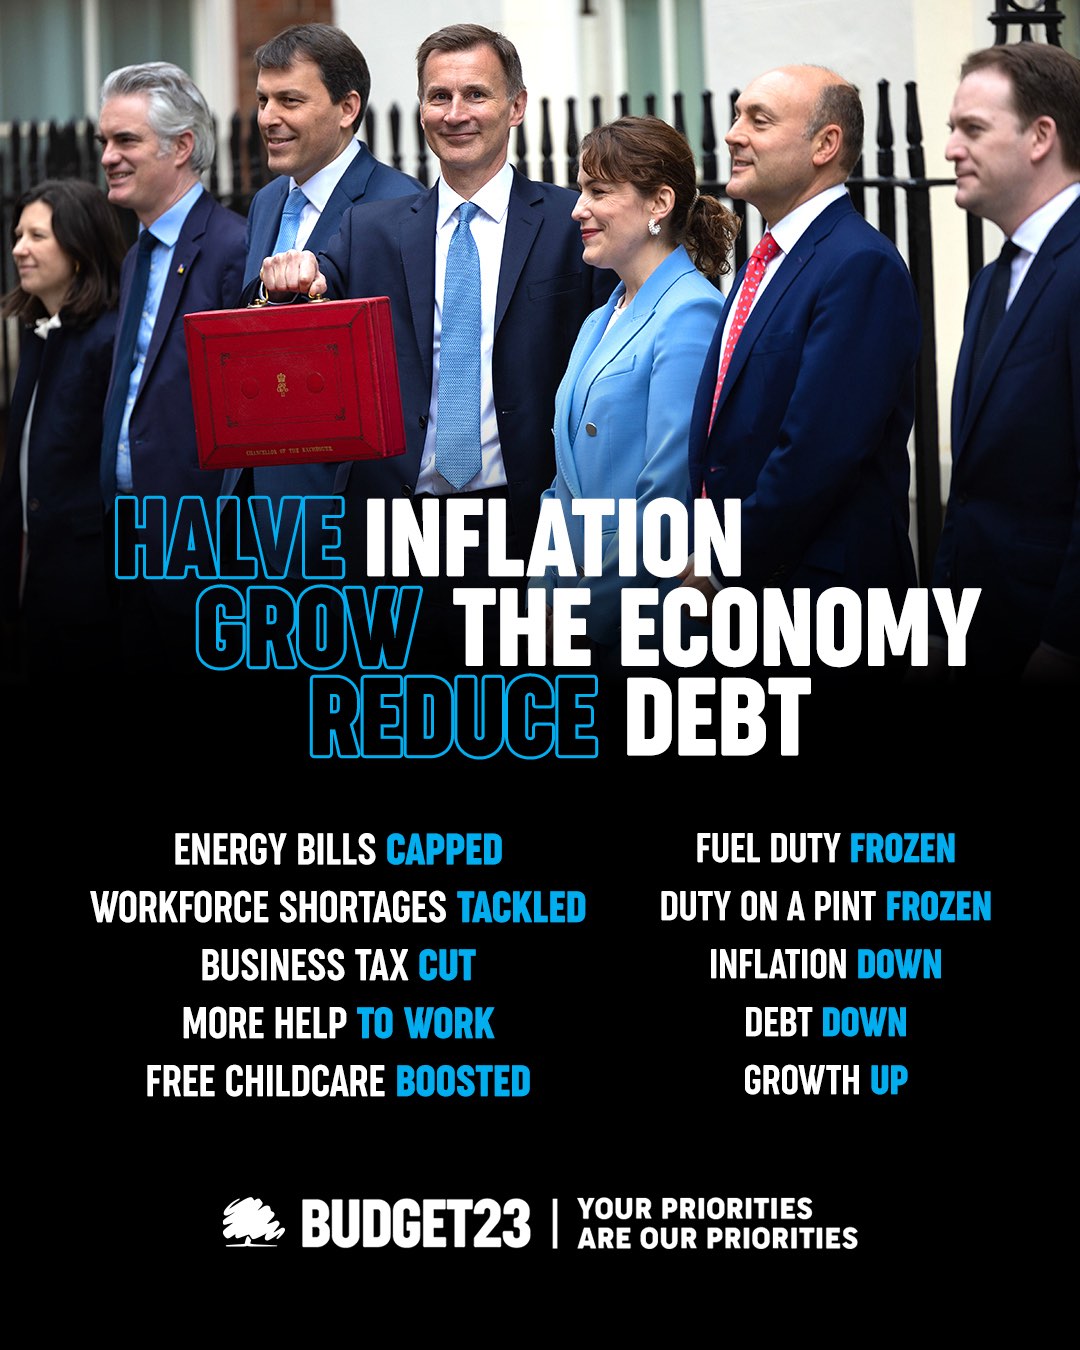 Halve inflation, grow the economy, reduce debt